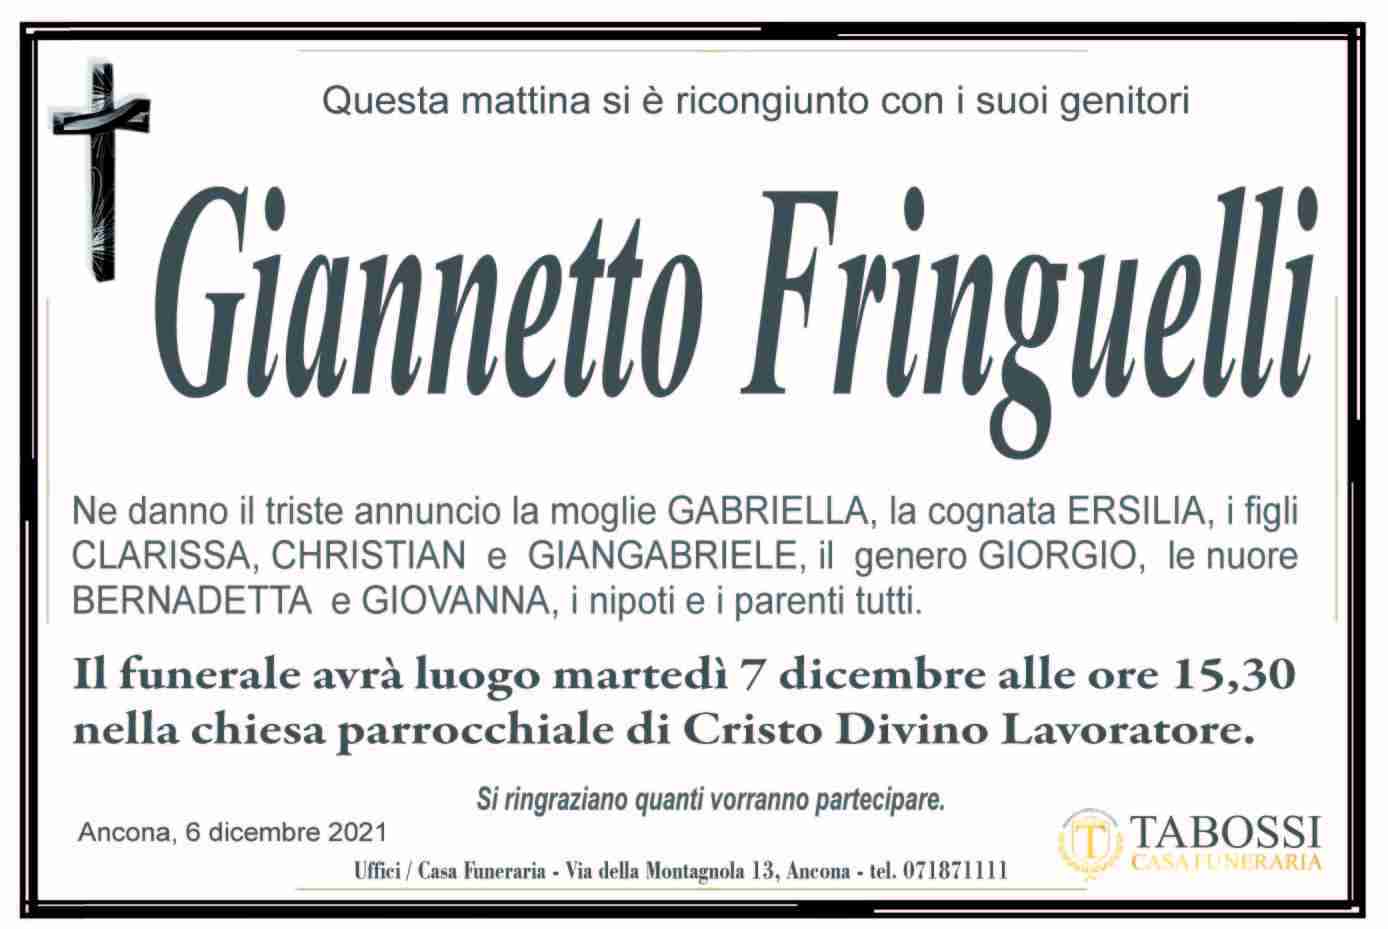 Giannetto Fringuelli